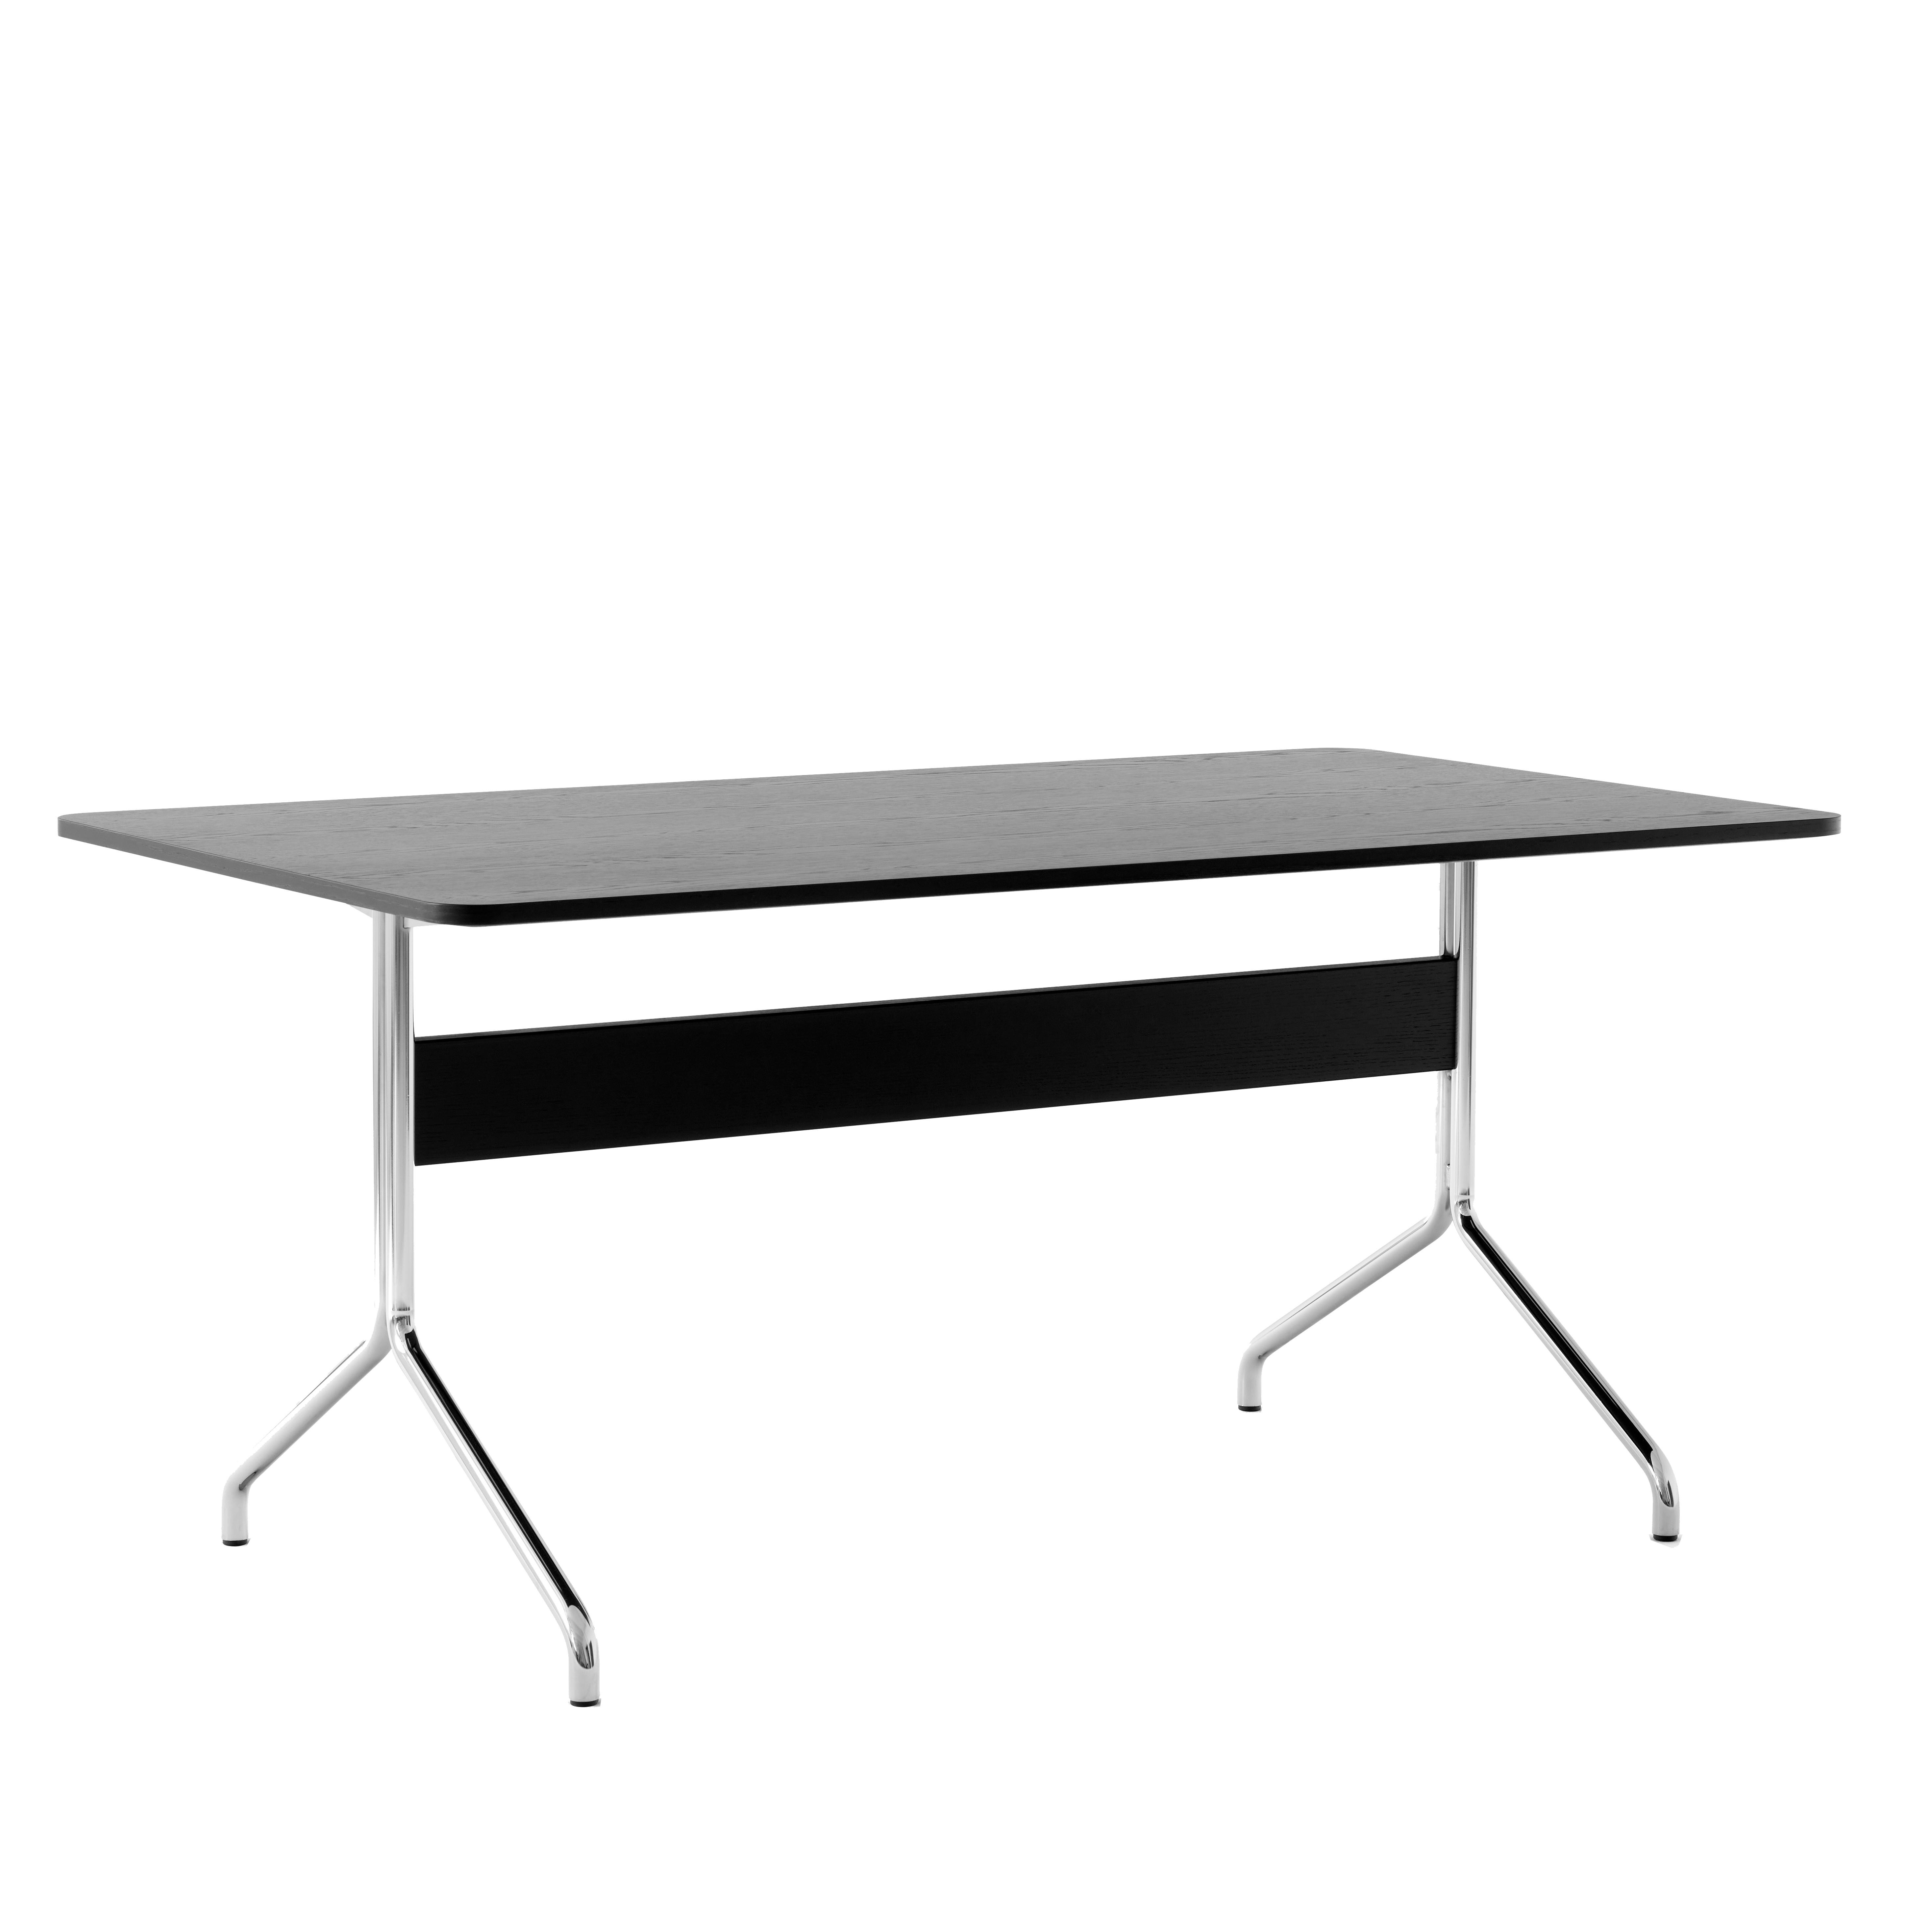 &tradition Pavilion AV18 tafel 160x90 chrome onderstel, zwart eiken |  Flinders